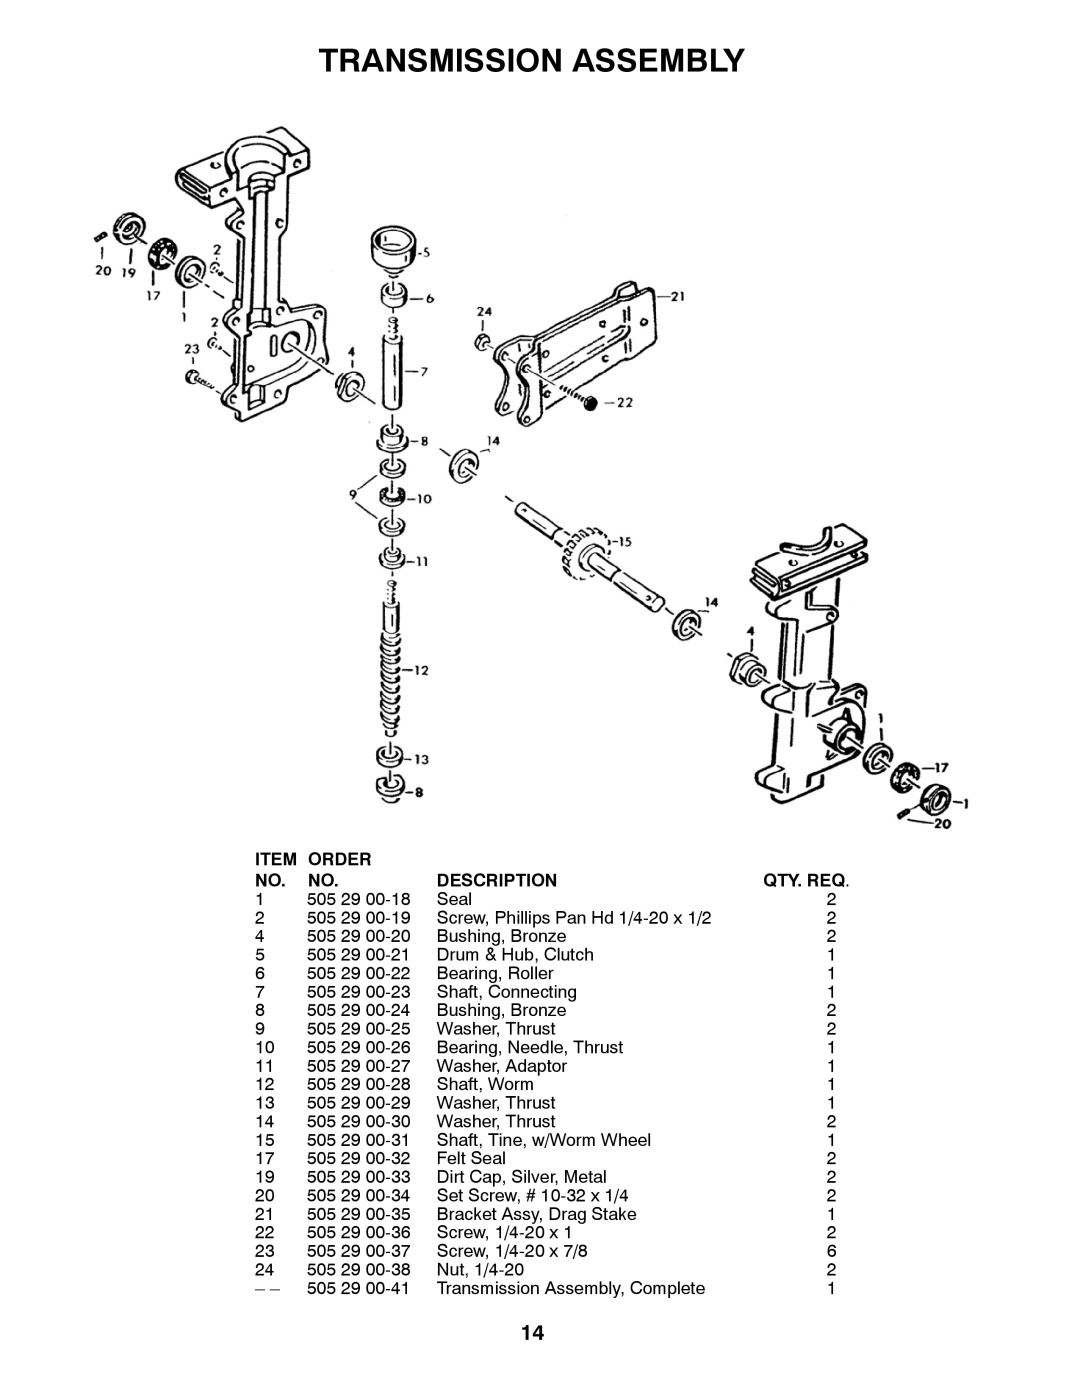 Husqvarna 966957301 specifications Transmission Assembly, Item Order, Qty. Req, Description 